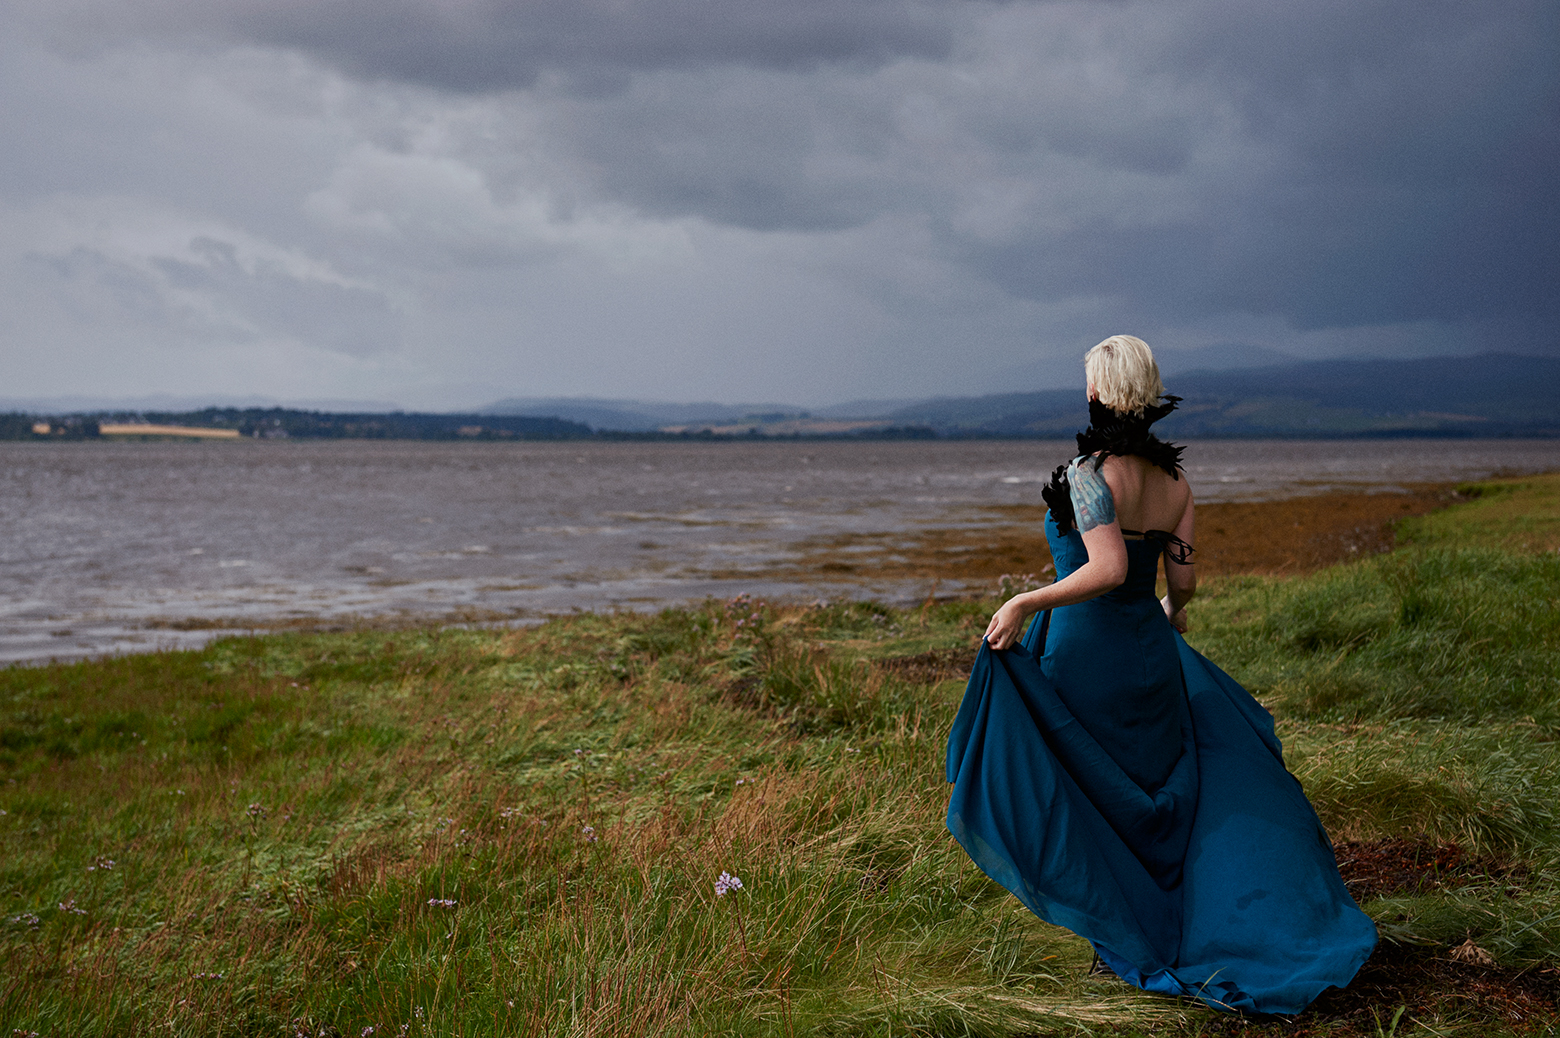 Photographin the wonderful Natalie on the Black Isle, Scotland.